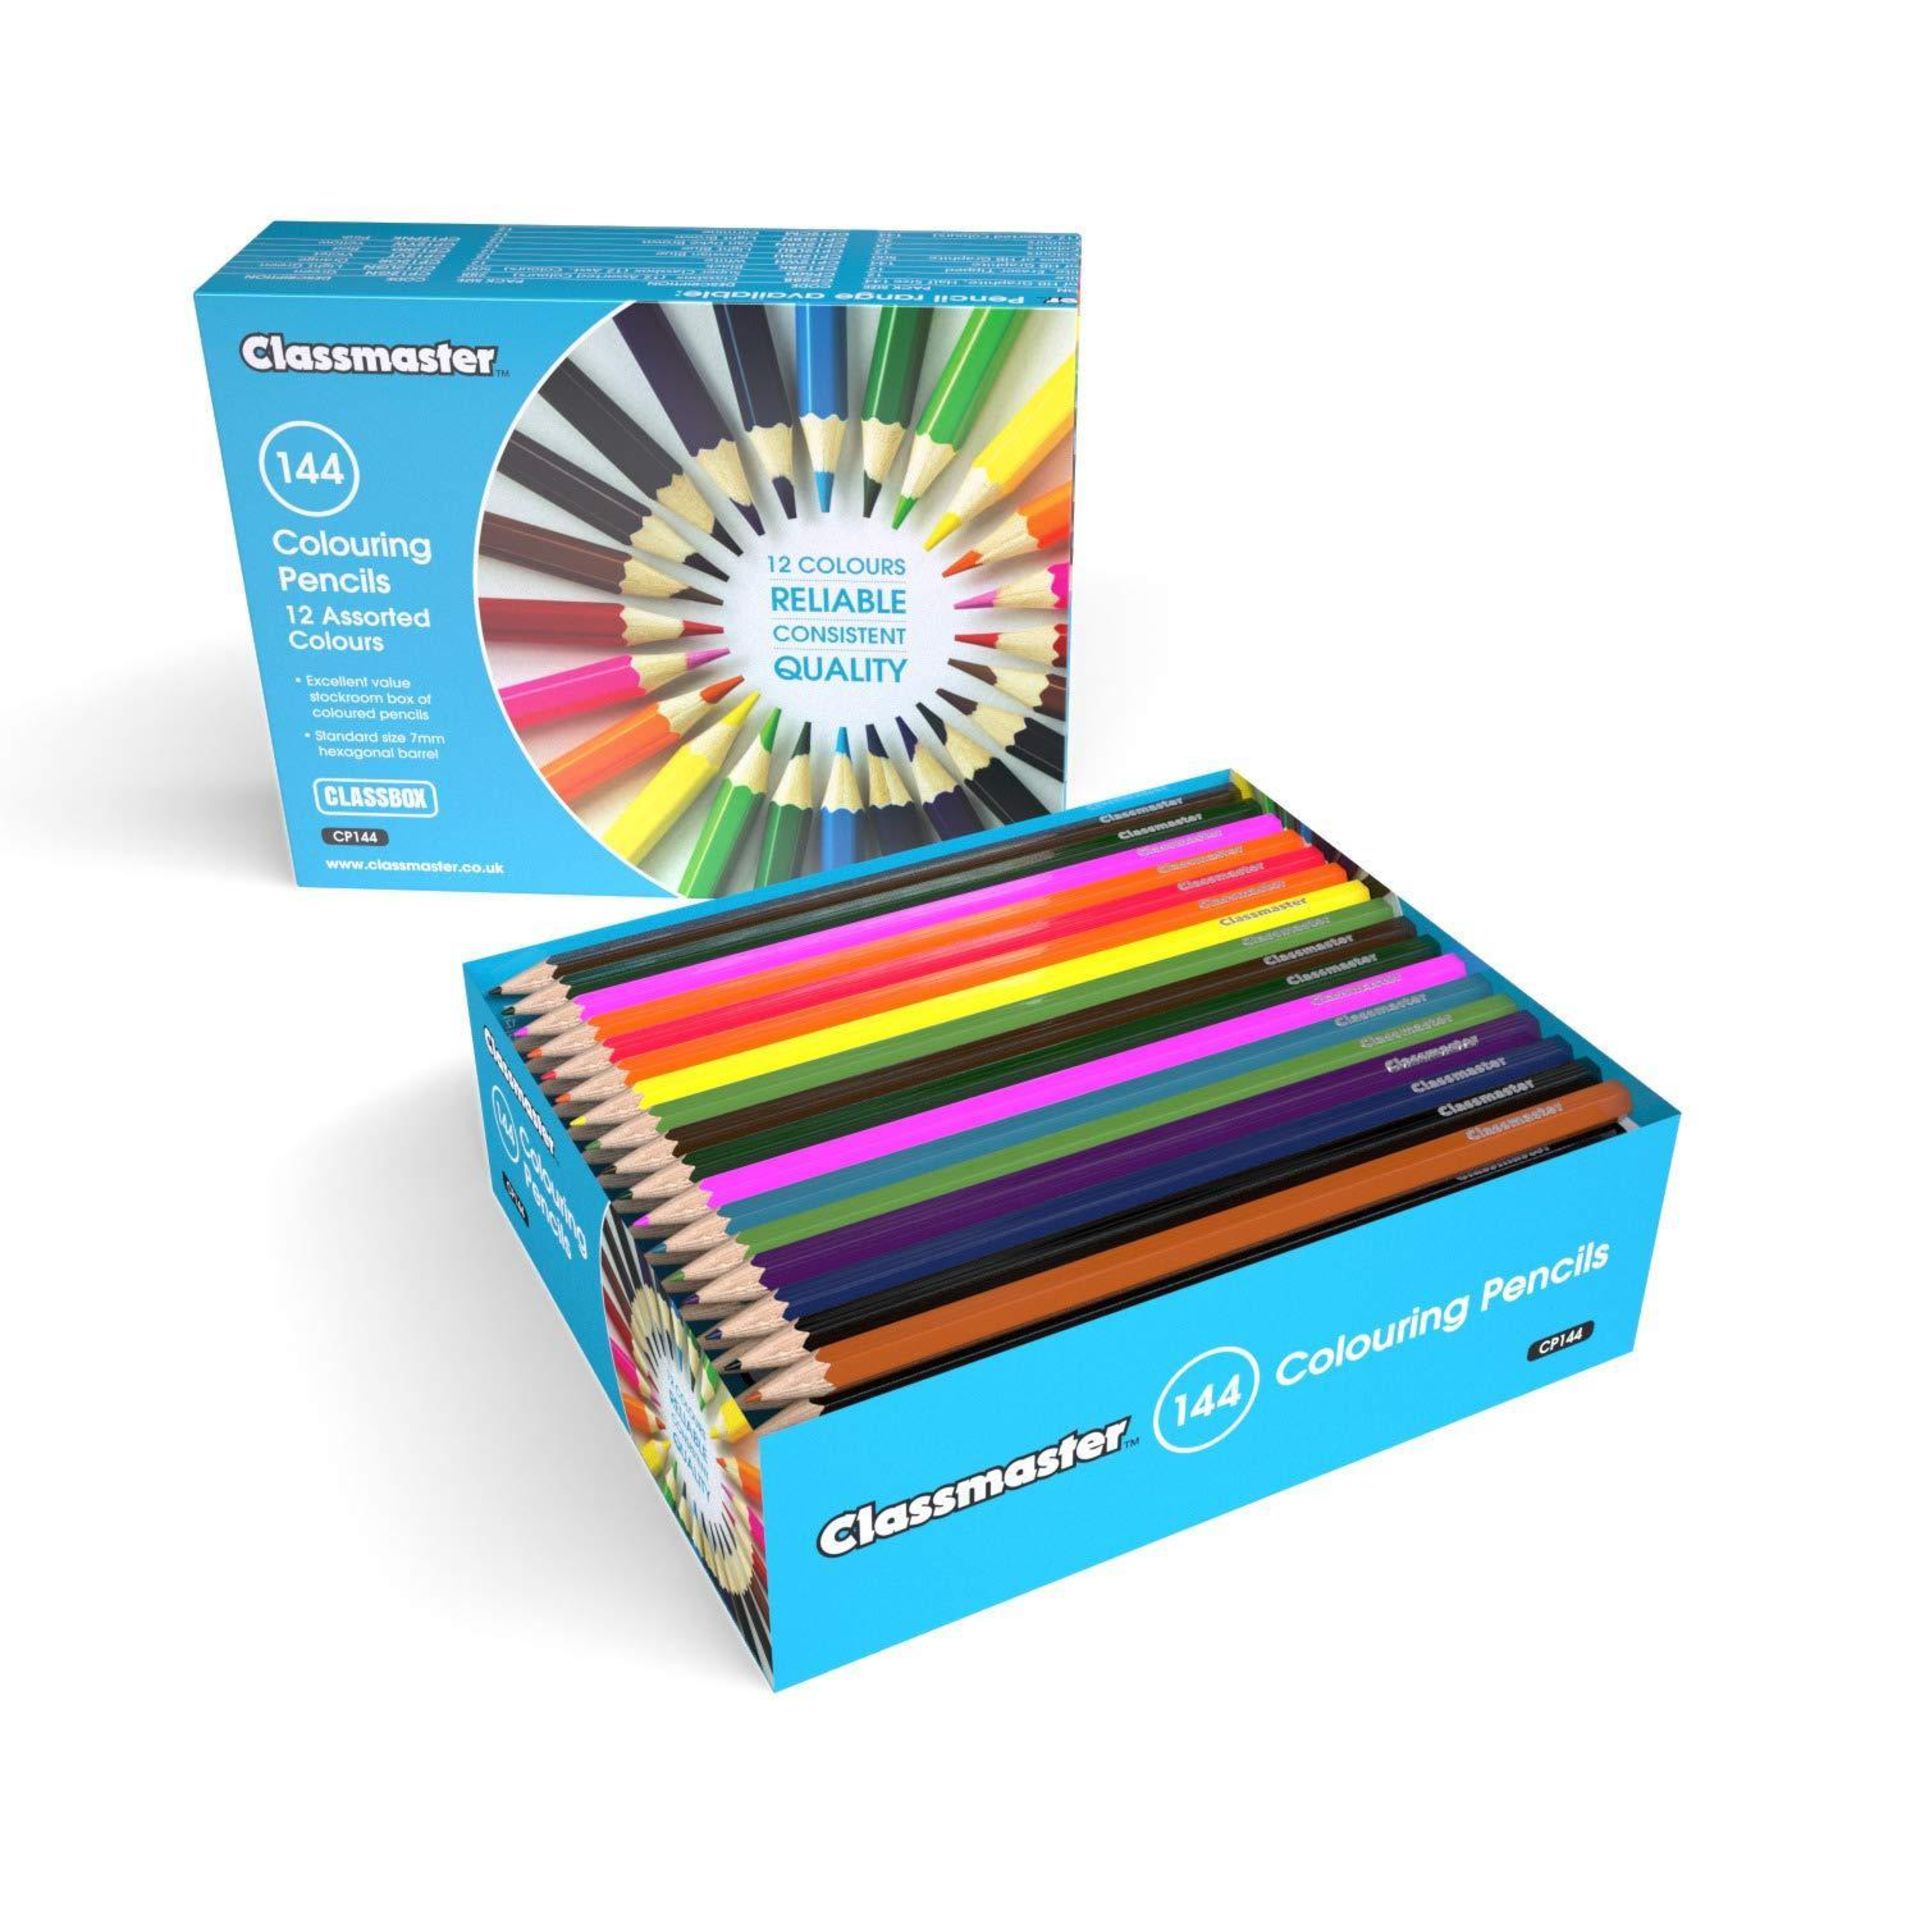 Classmaster Class Box Colouring Pencils – Standard Full-Size, Pre-Sharpened Wooden Set £15.67 RRP